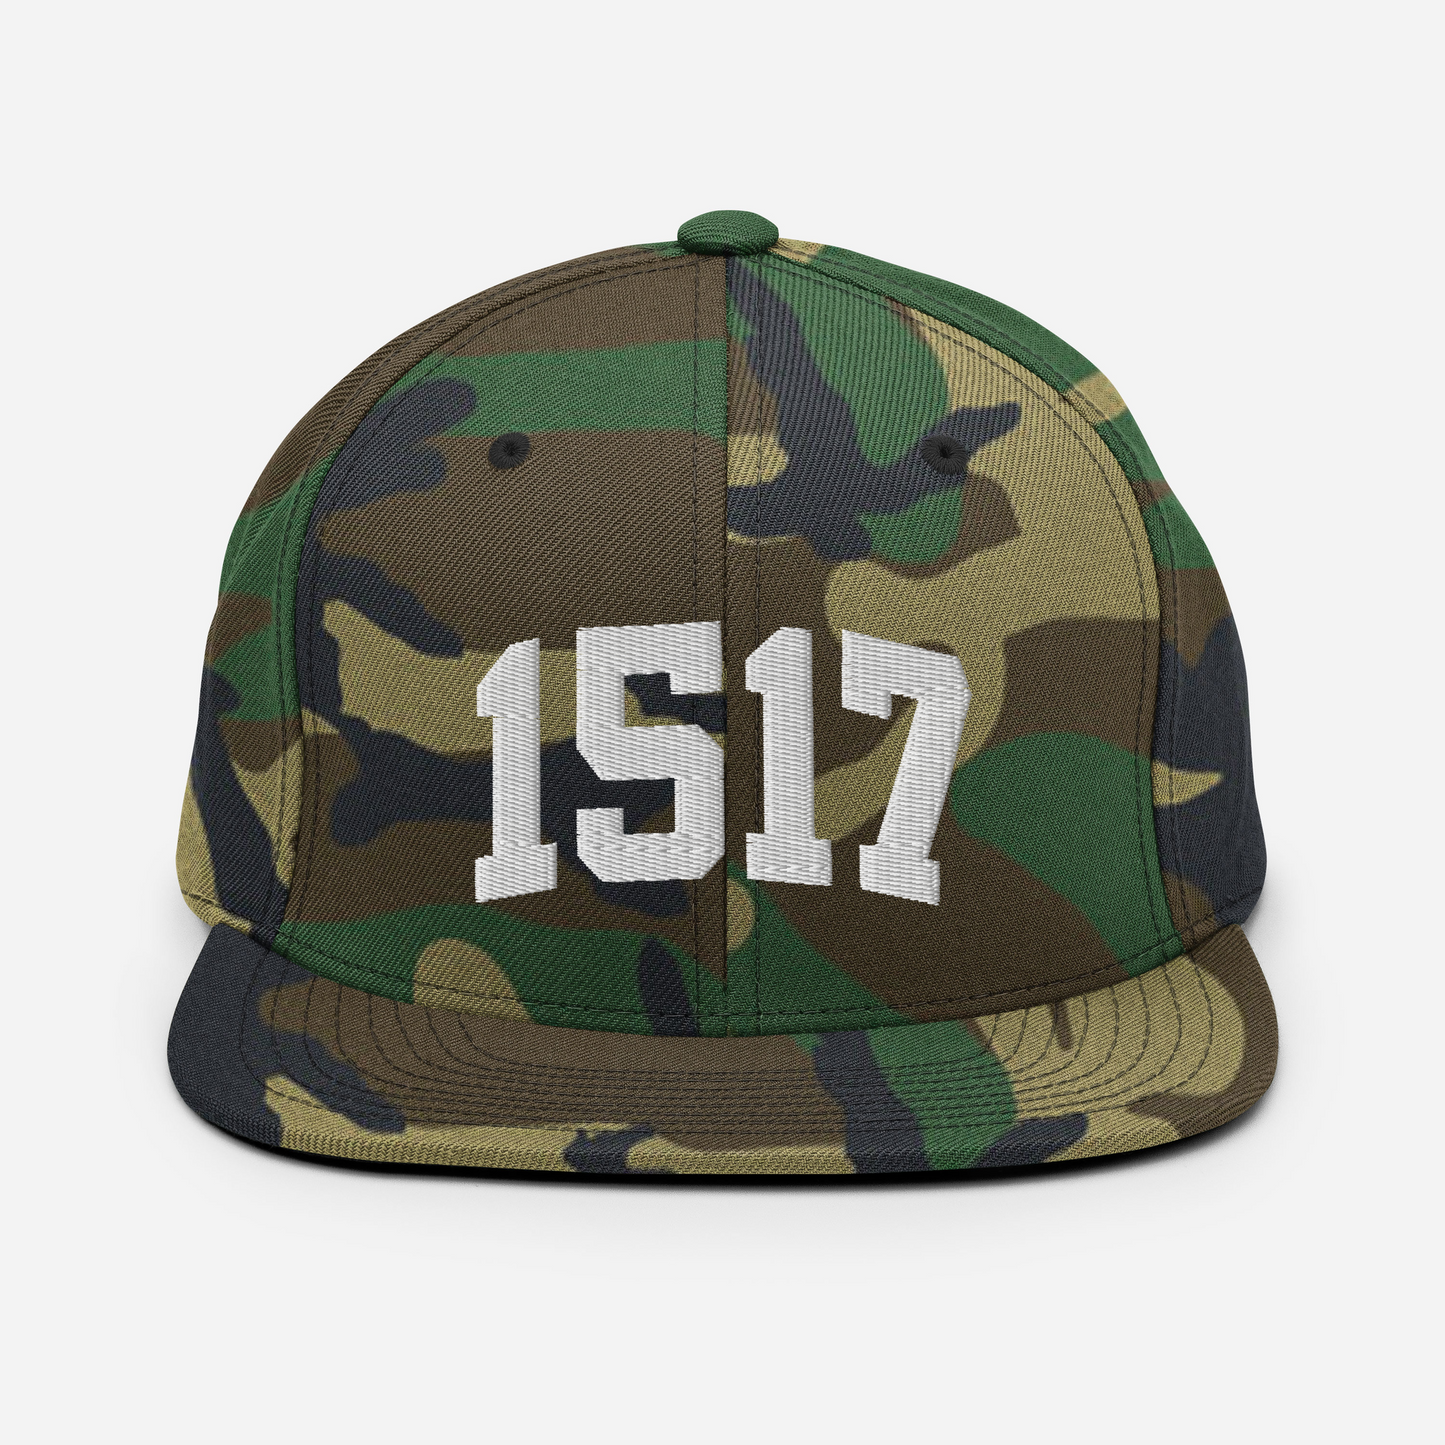 1517 Snapback Hat